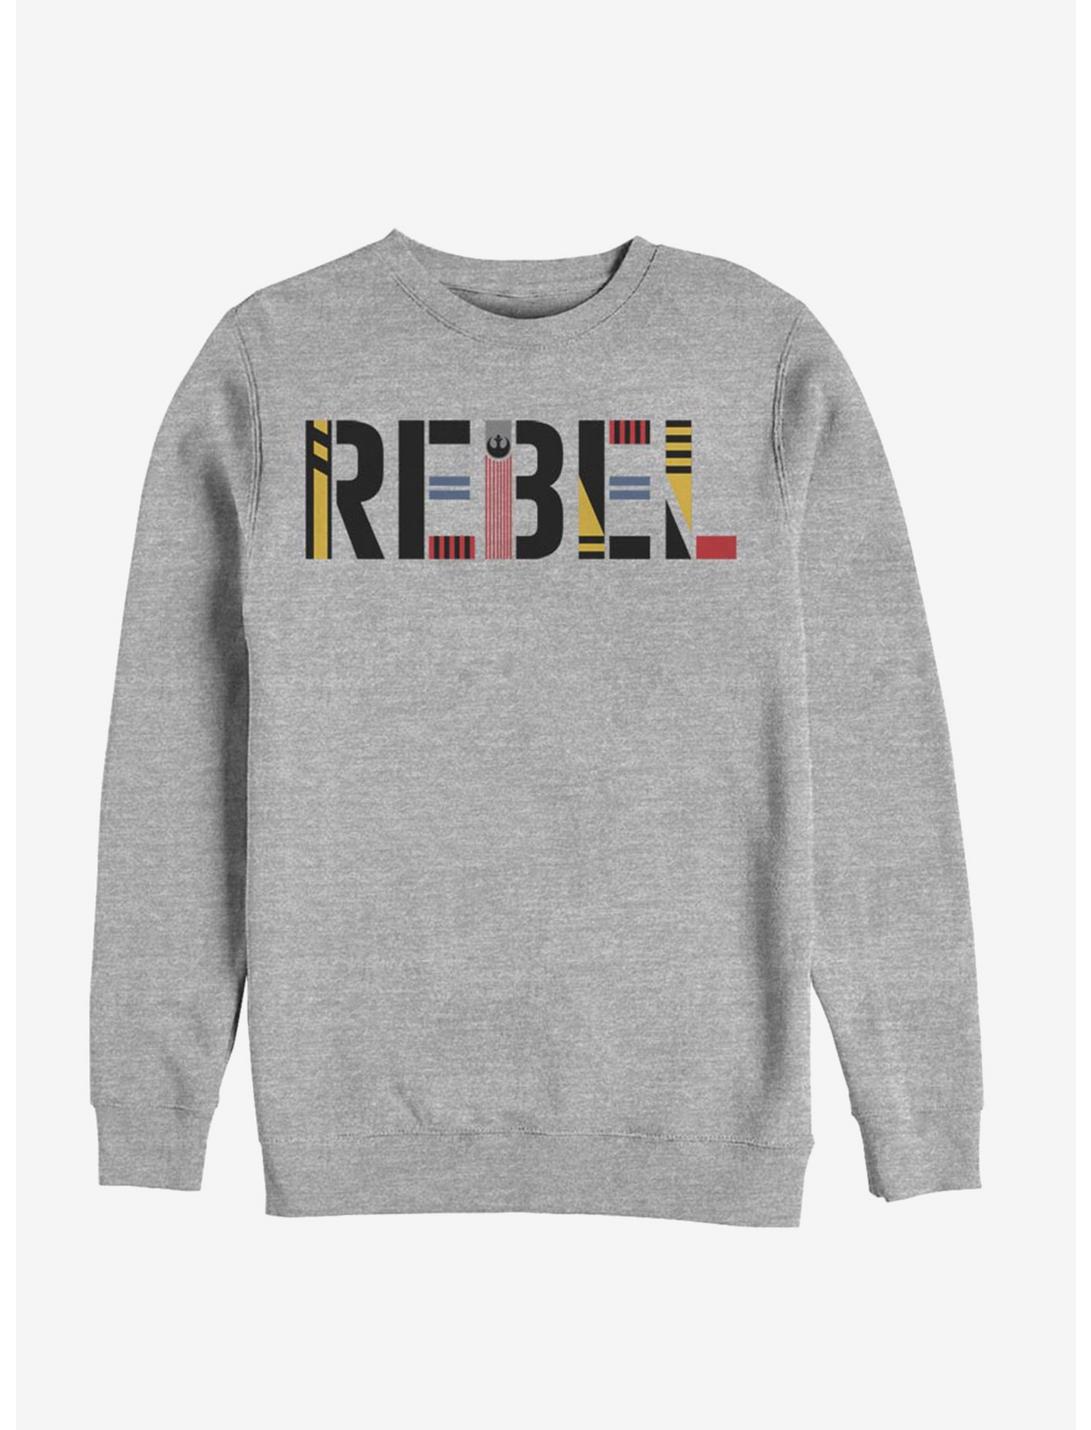 Star Wars Episode IX The Rise Of Skywalker Rebel Simple Sweatshirt, ATH HTR, hi-res